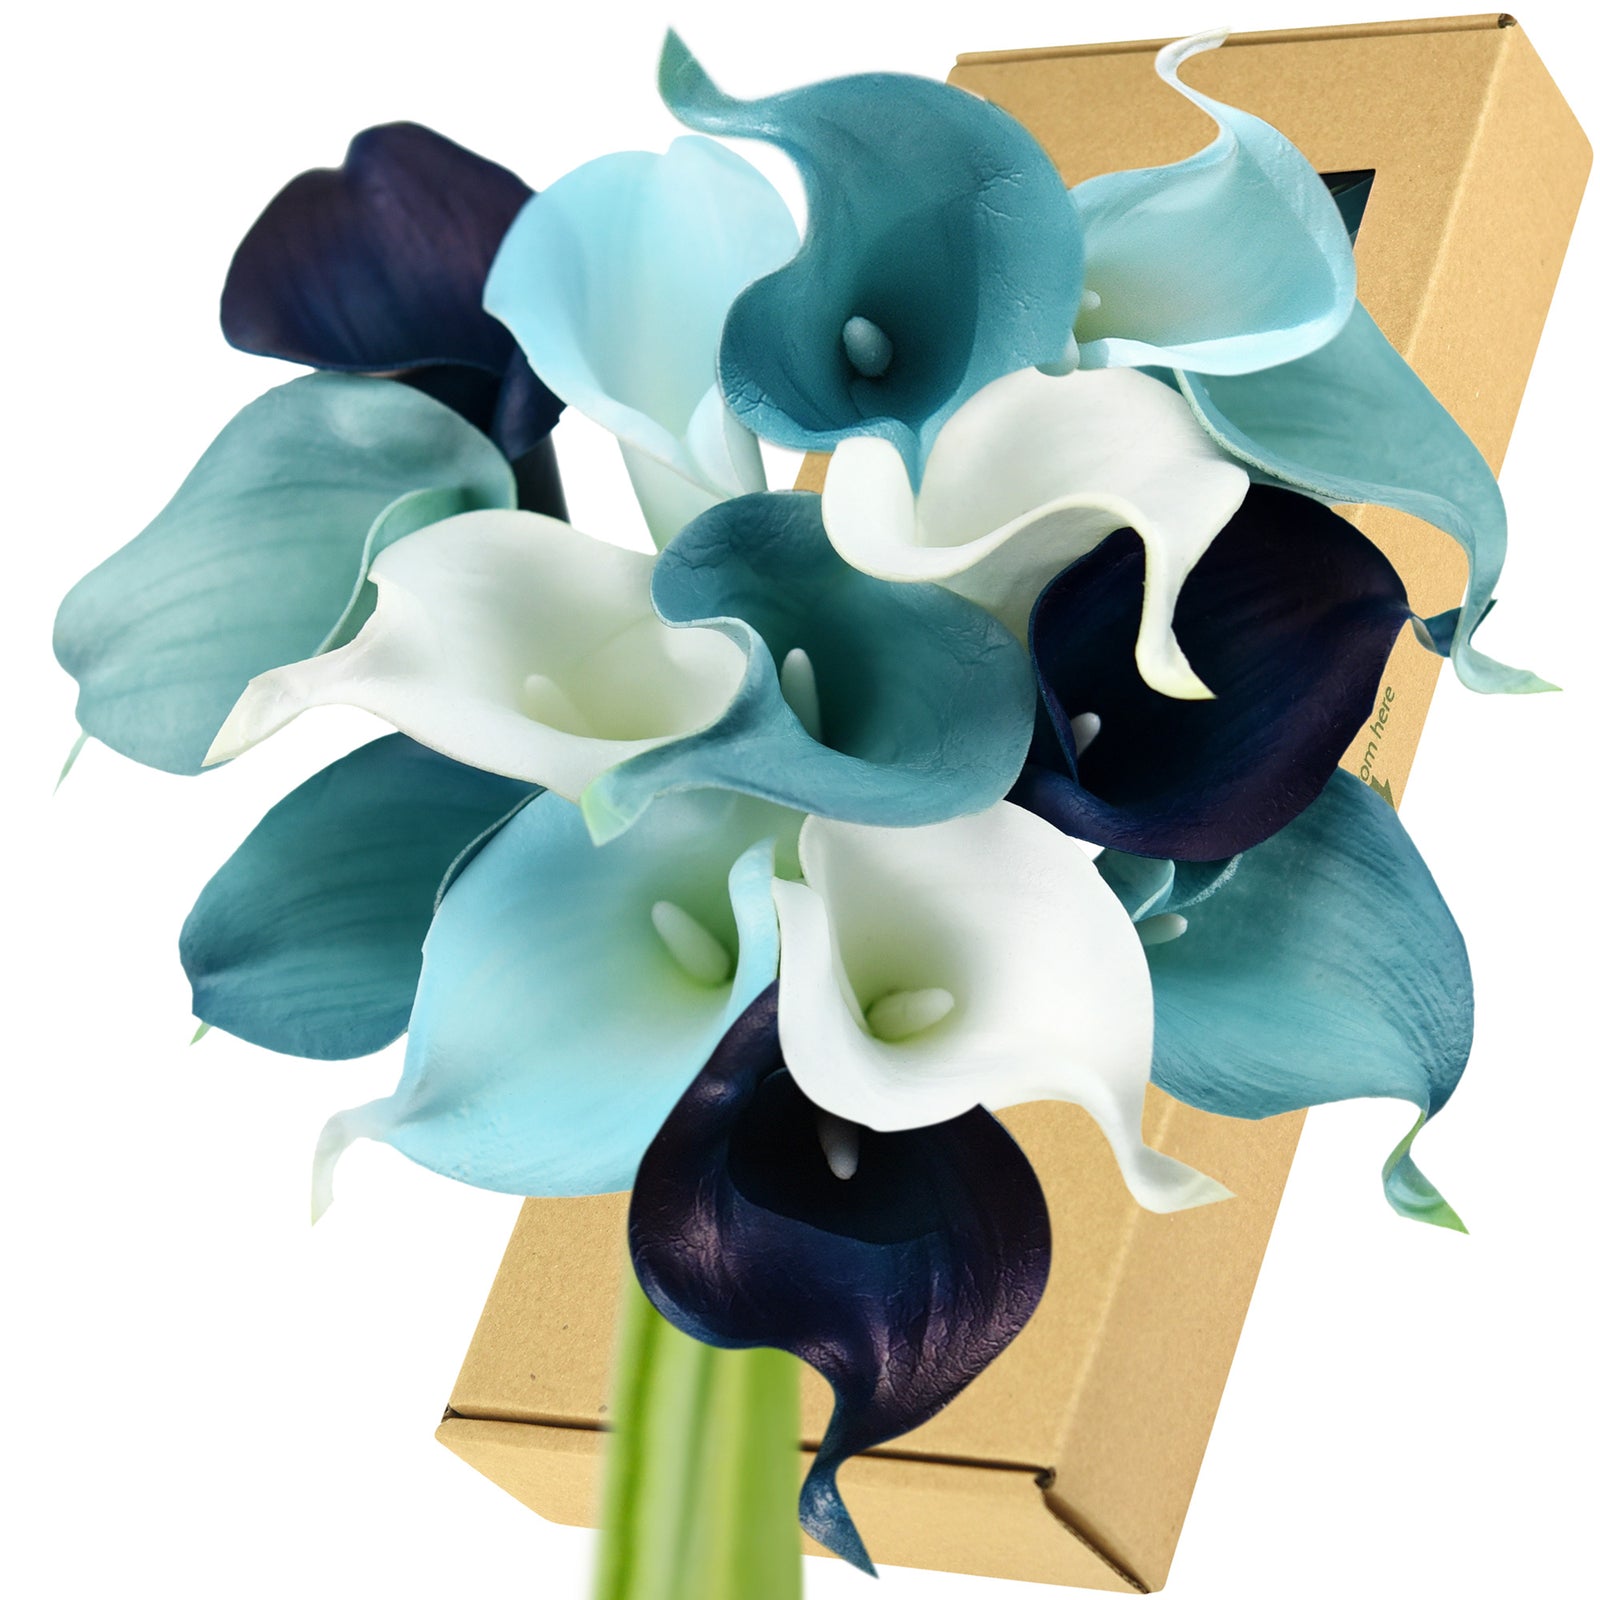 FiveSeasonStuff 15 Stems Real Touch (Posh Blue Mix) Calla Lilies Artificial Flower Bouquet, Wedding, Bridal, Party, Home Décor DIY